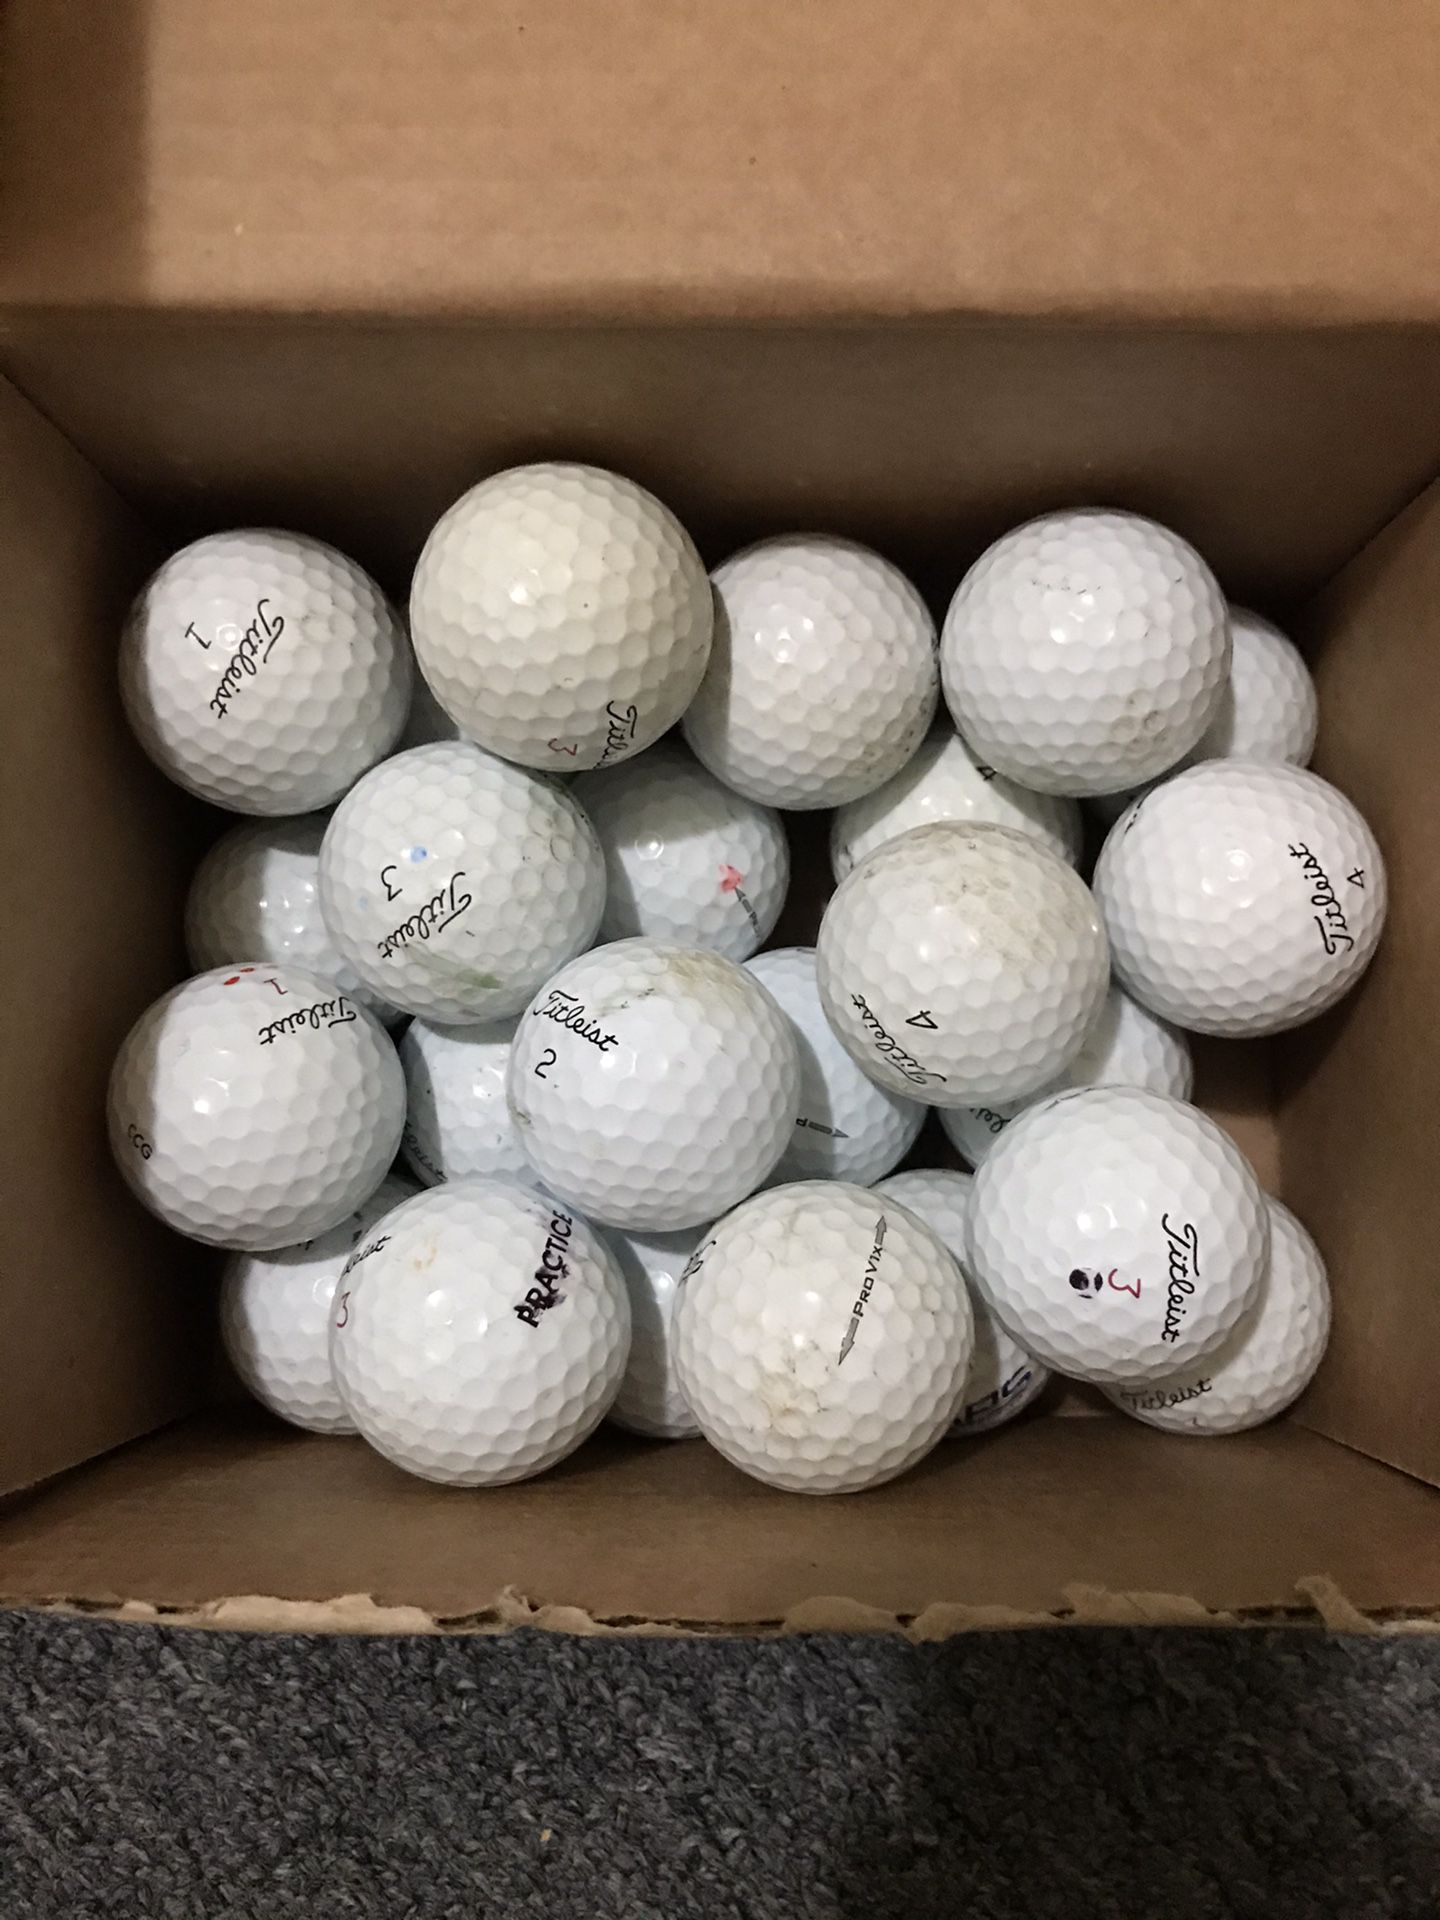 Used Titleist golf balls